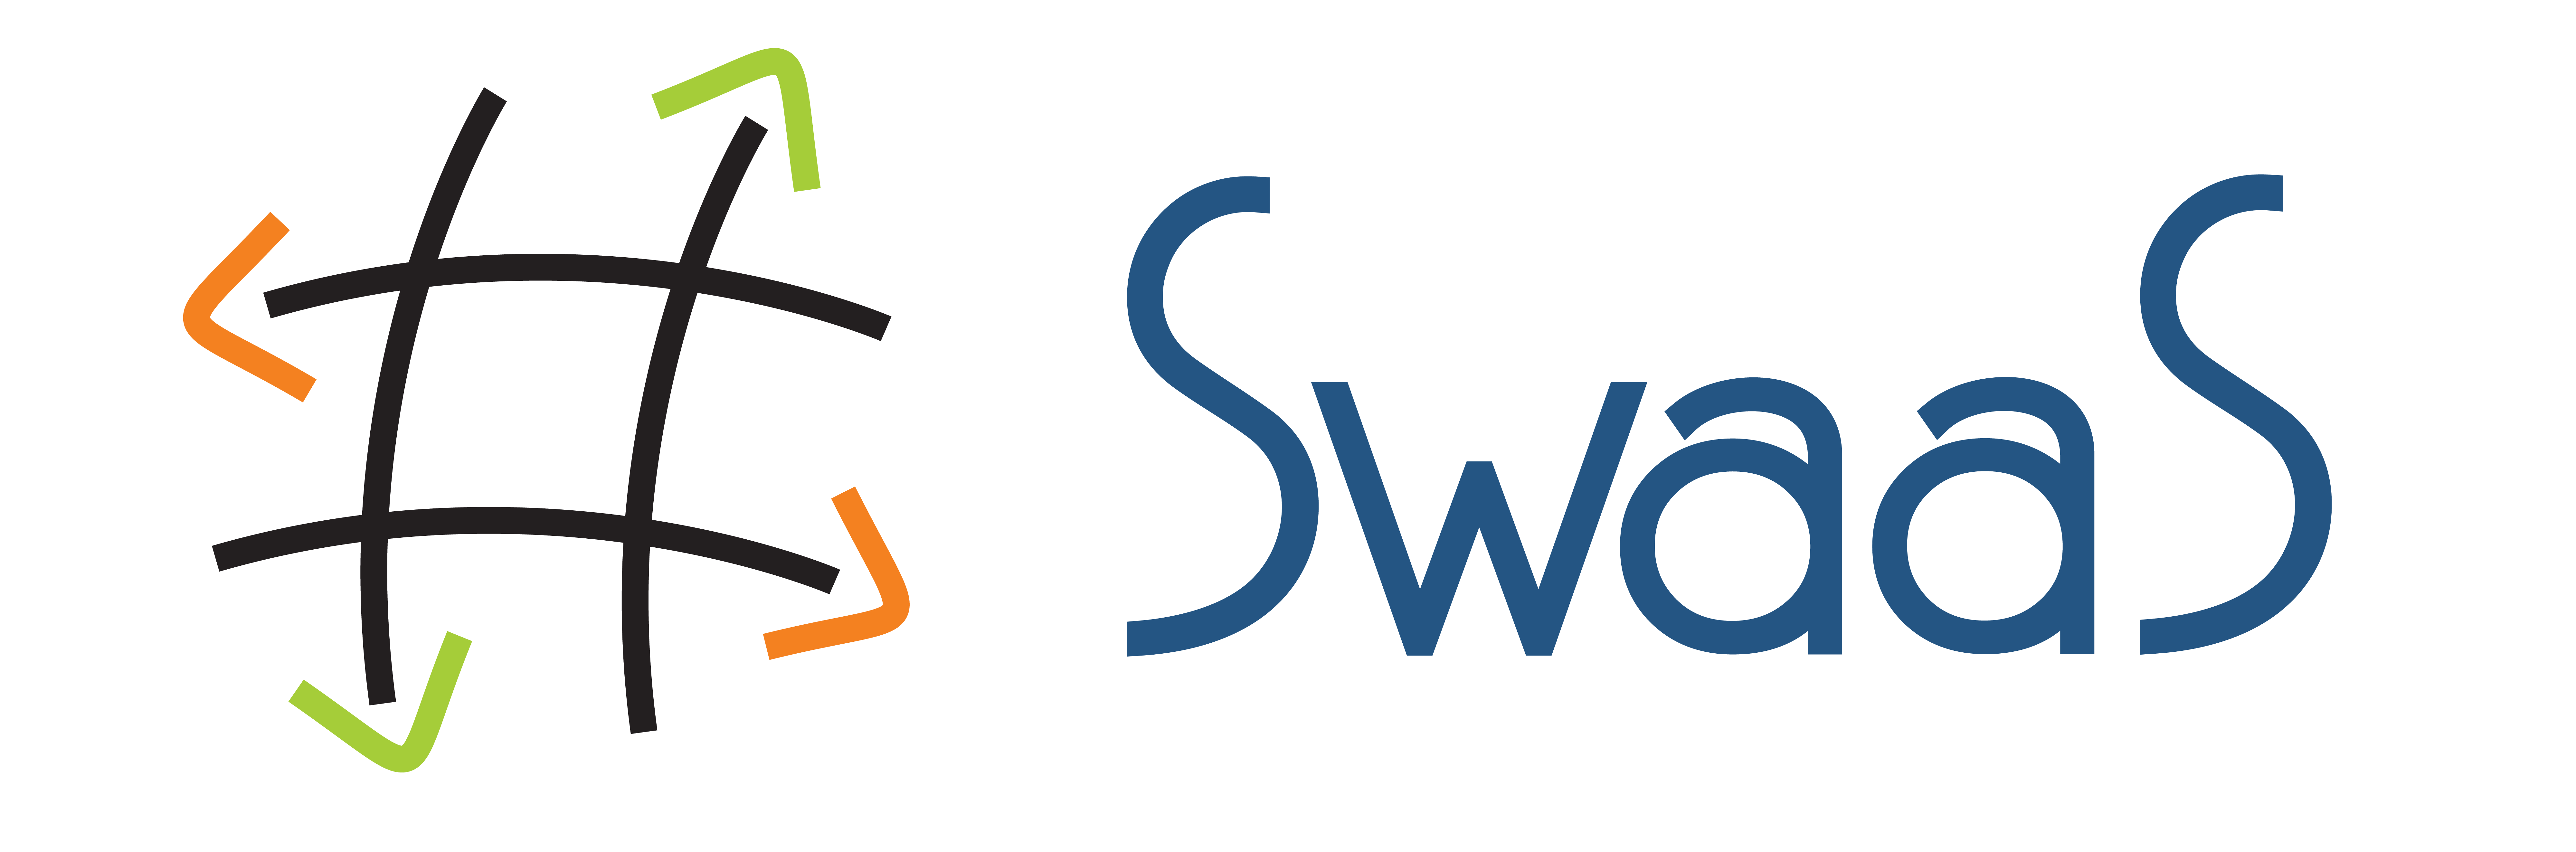 swaas logo